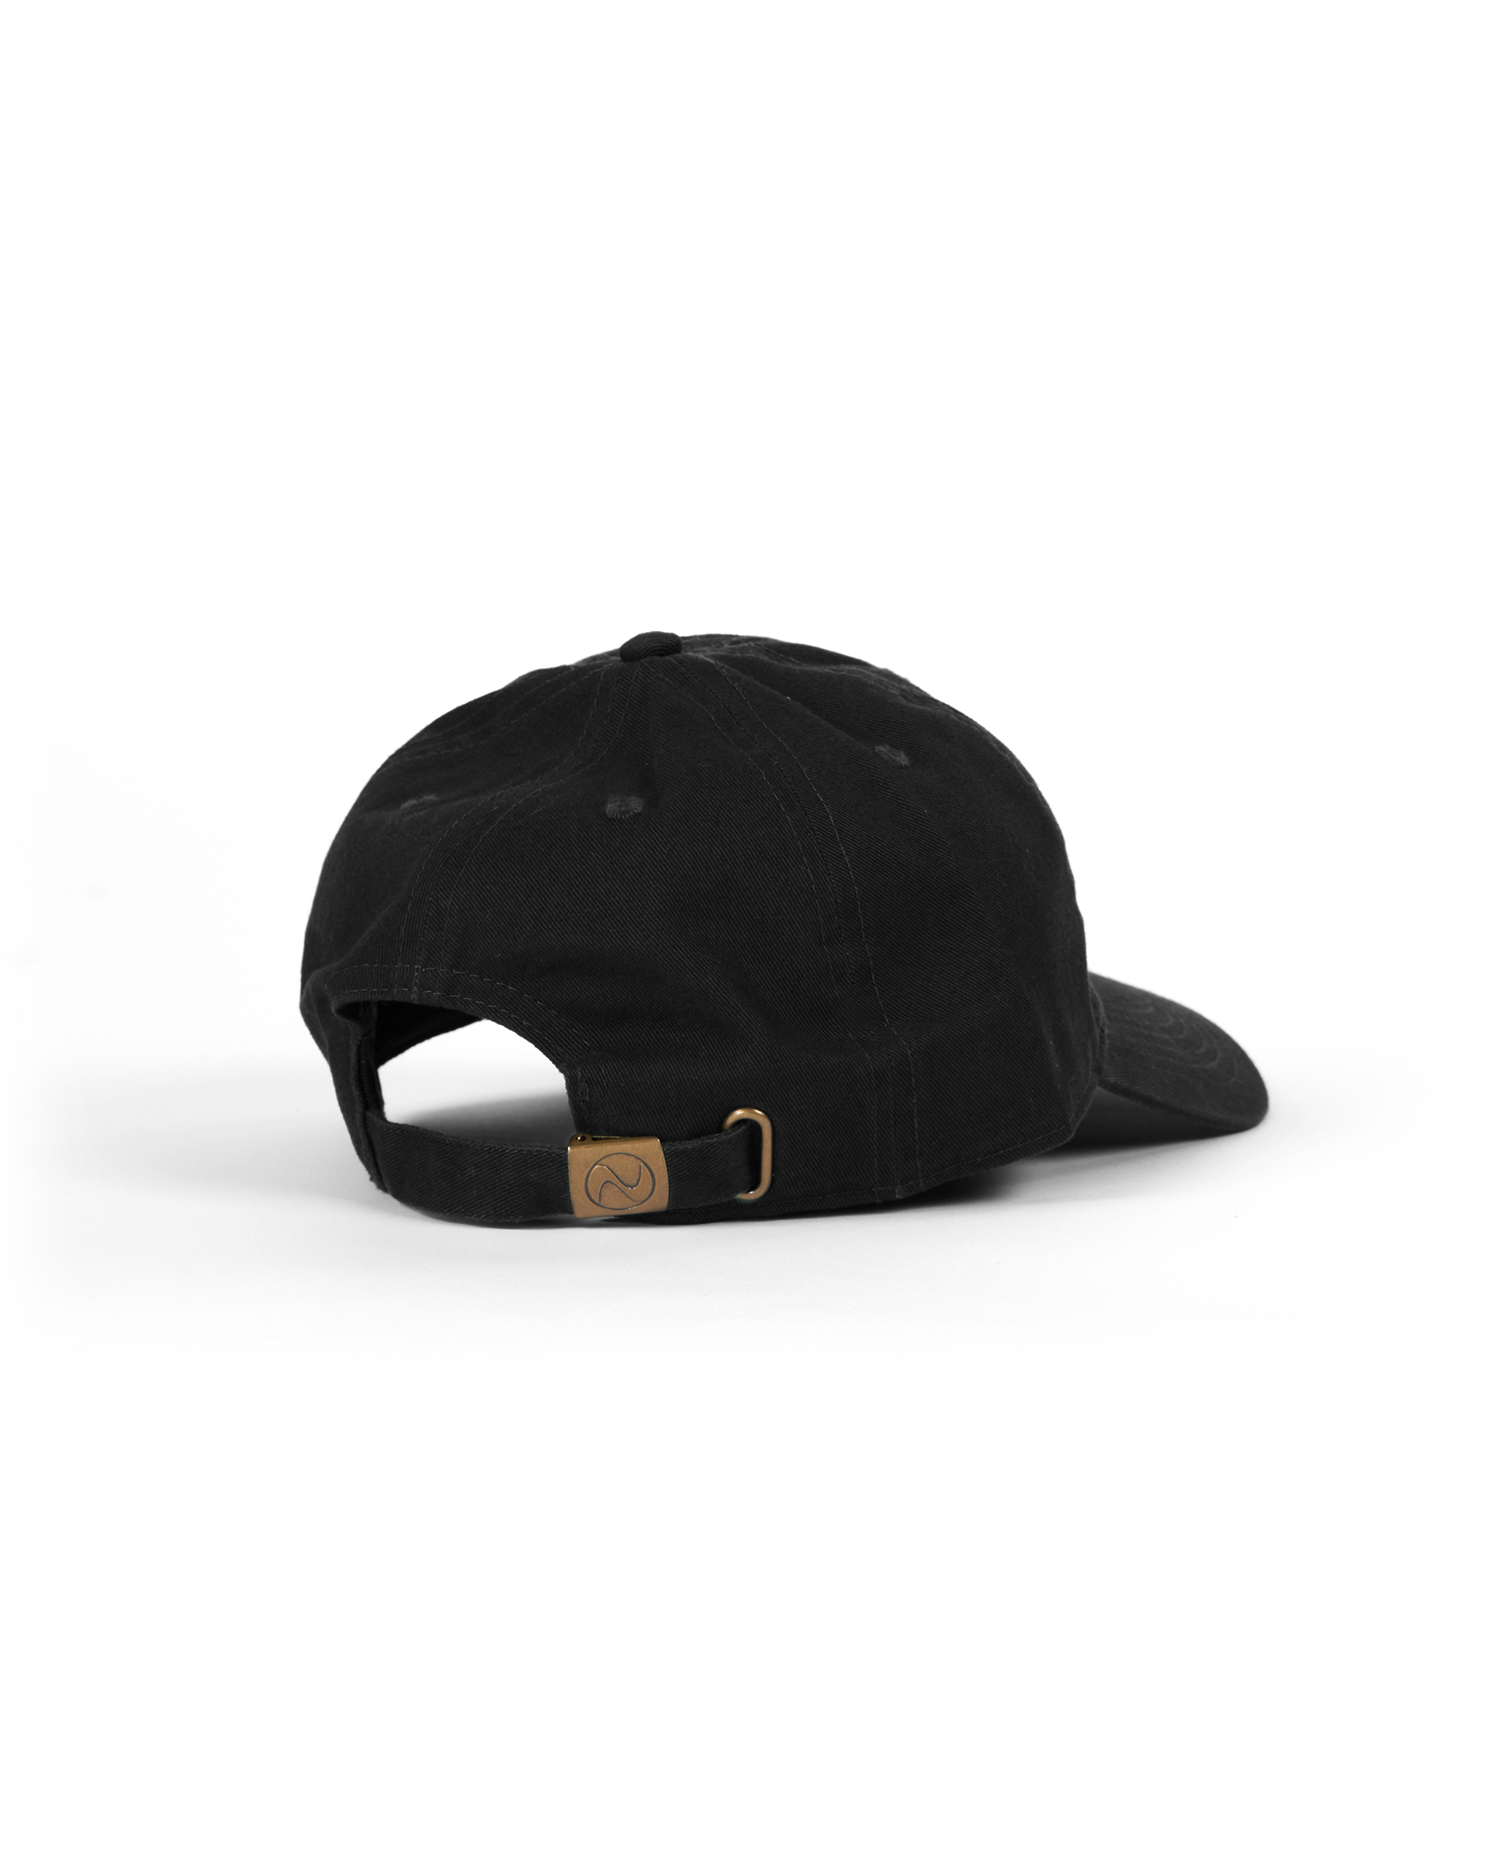 H&L Posse Hat - Black